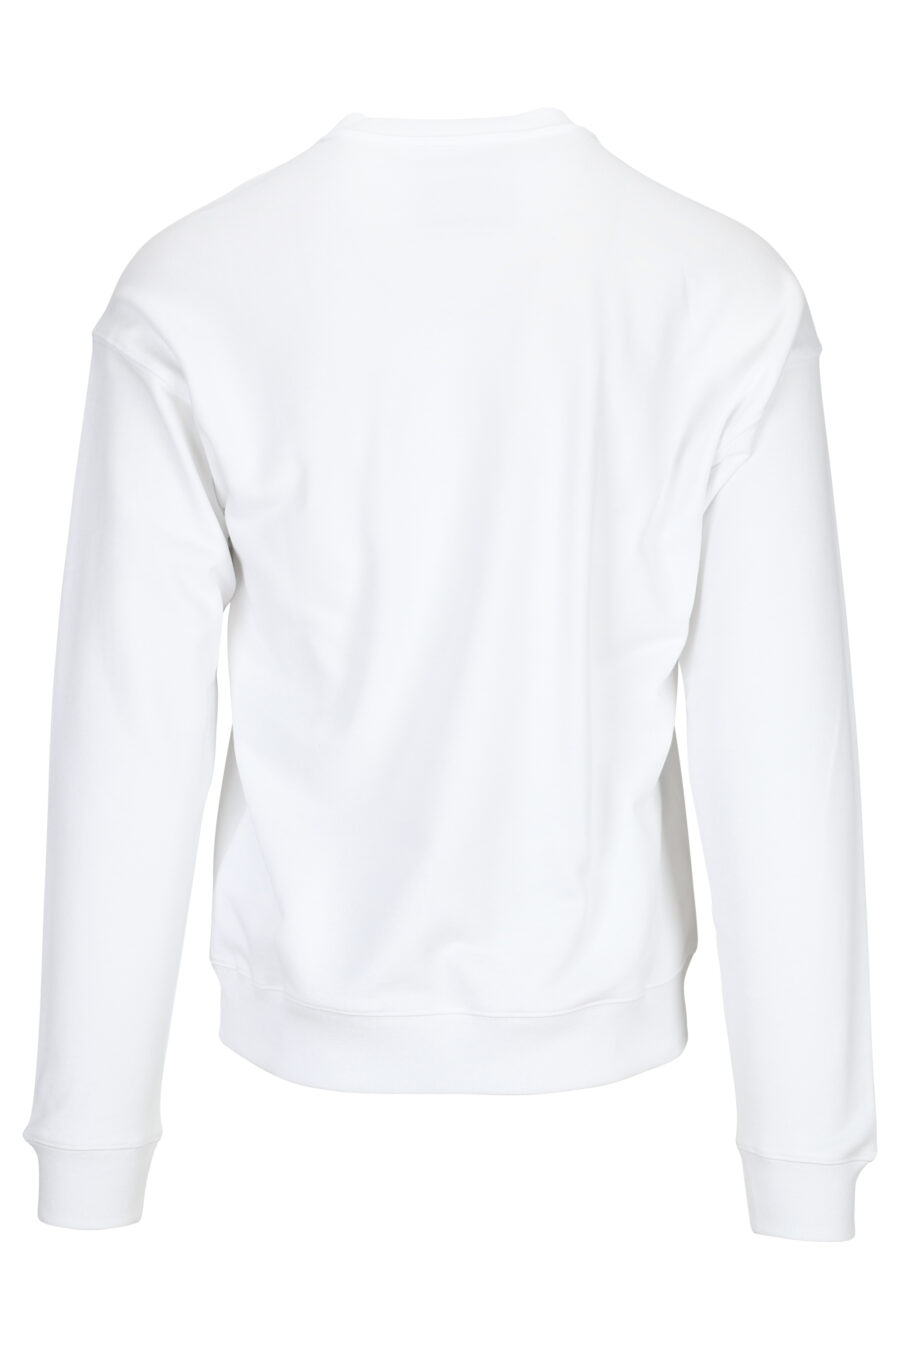 White sweatshirt with black maxilogue - 889316943894 1